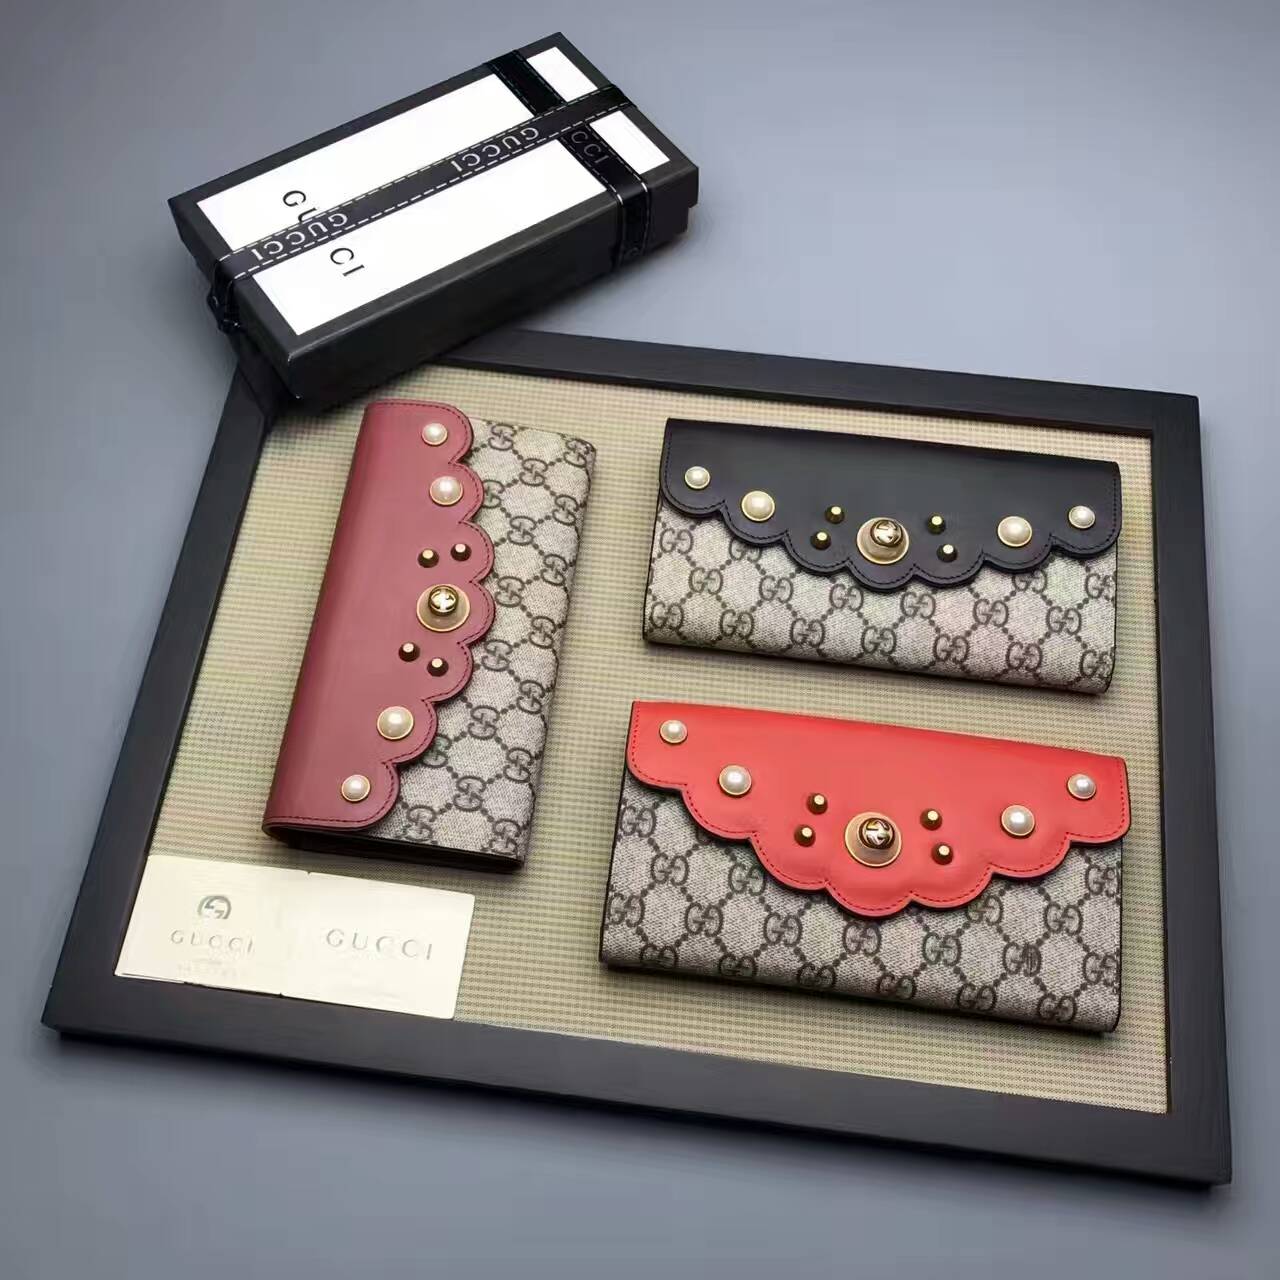 Gucci GG Supreme continental wallet-431474